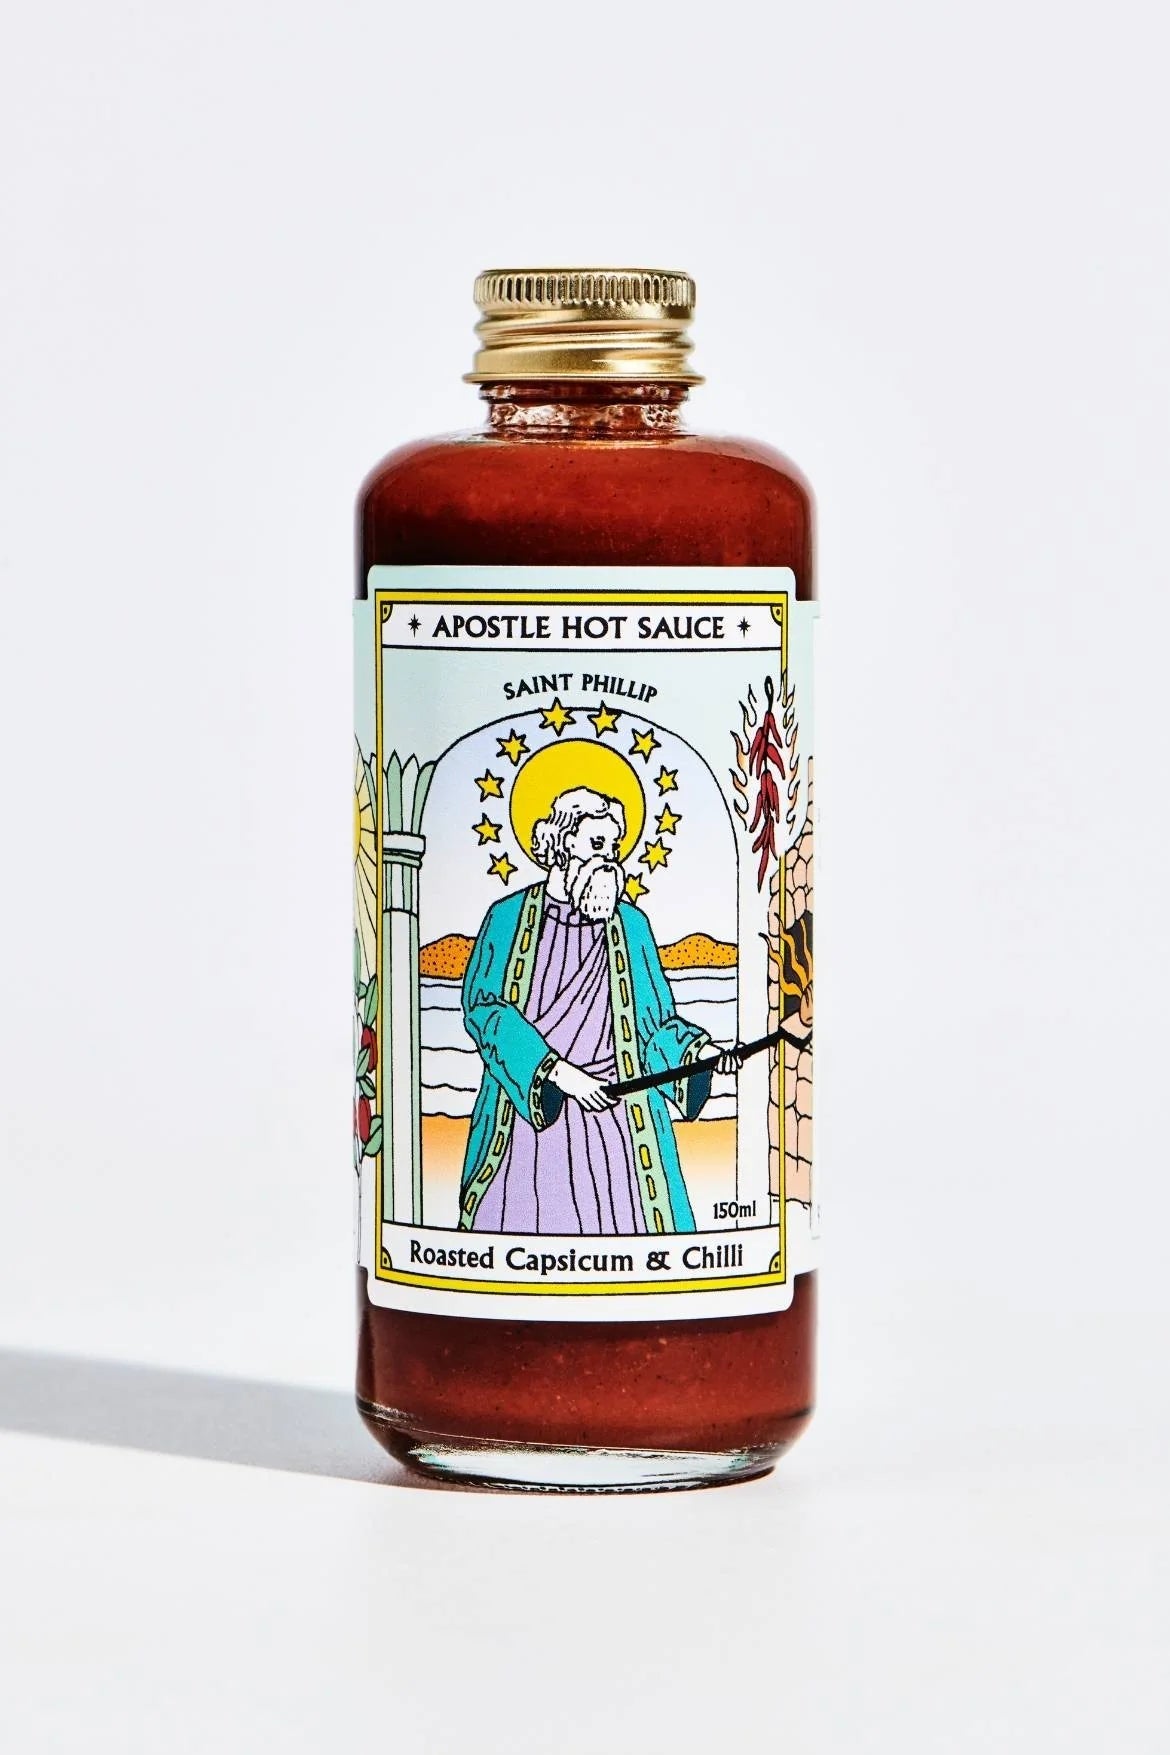 Saint Phillip - Roasted Capsicum & Chilli | Apostle Hot Sauce-Apostle Hot Sauce-Condiments-Jade and May